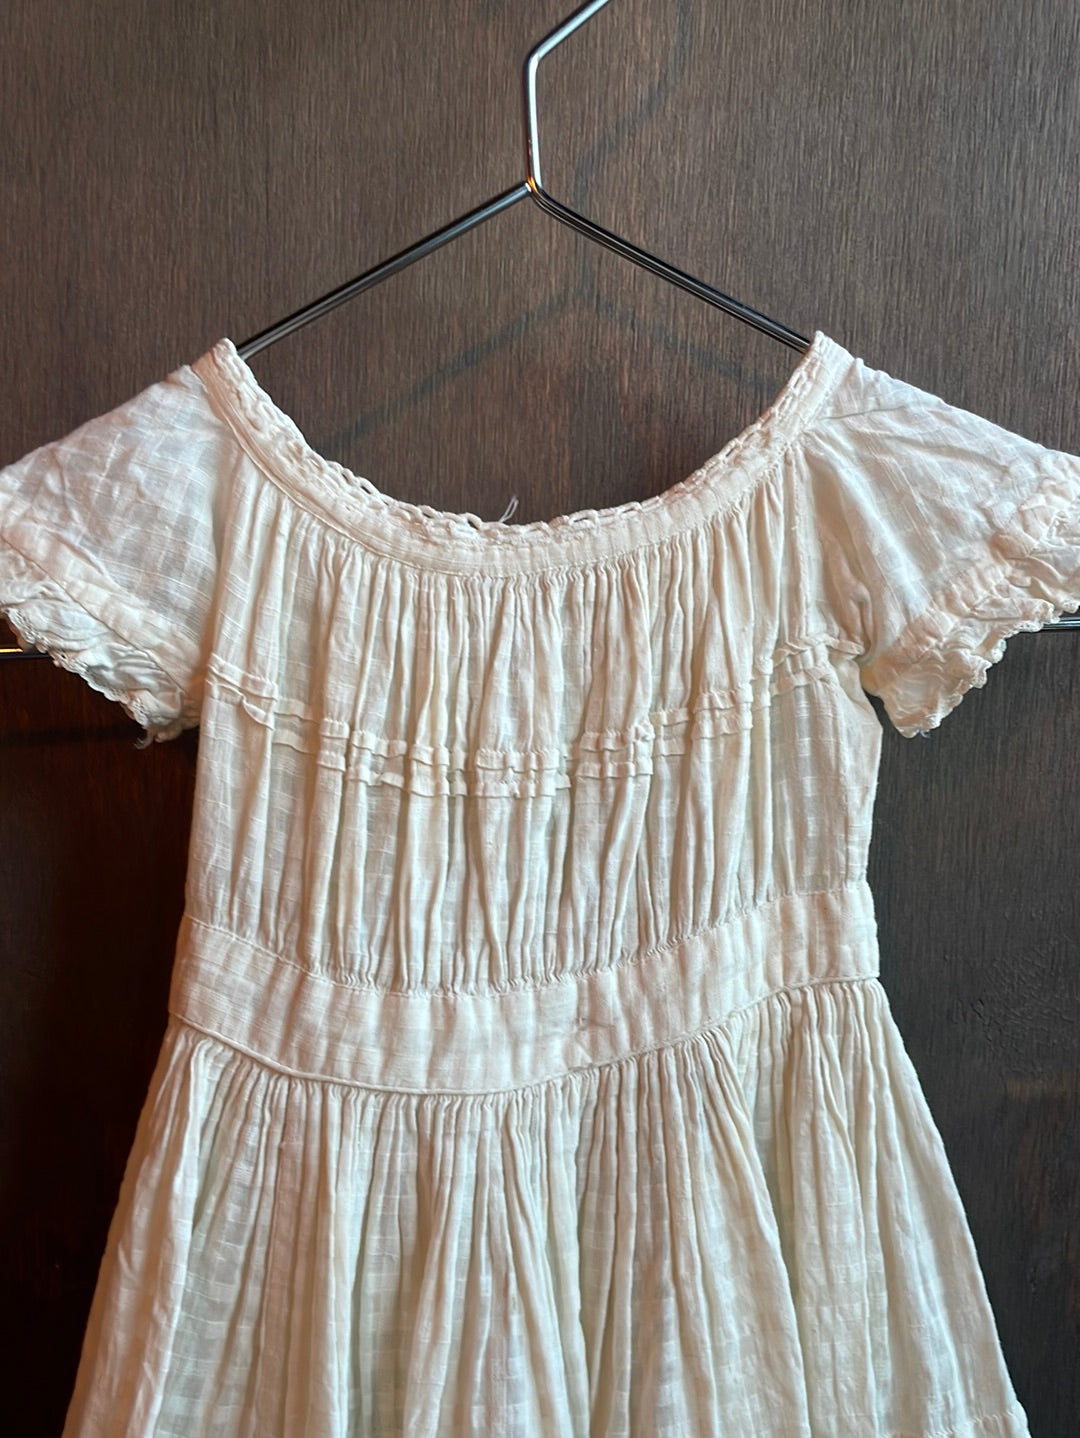 Kid’s Vintage White Dress